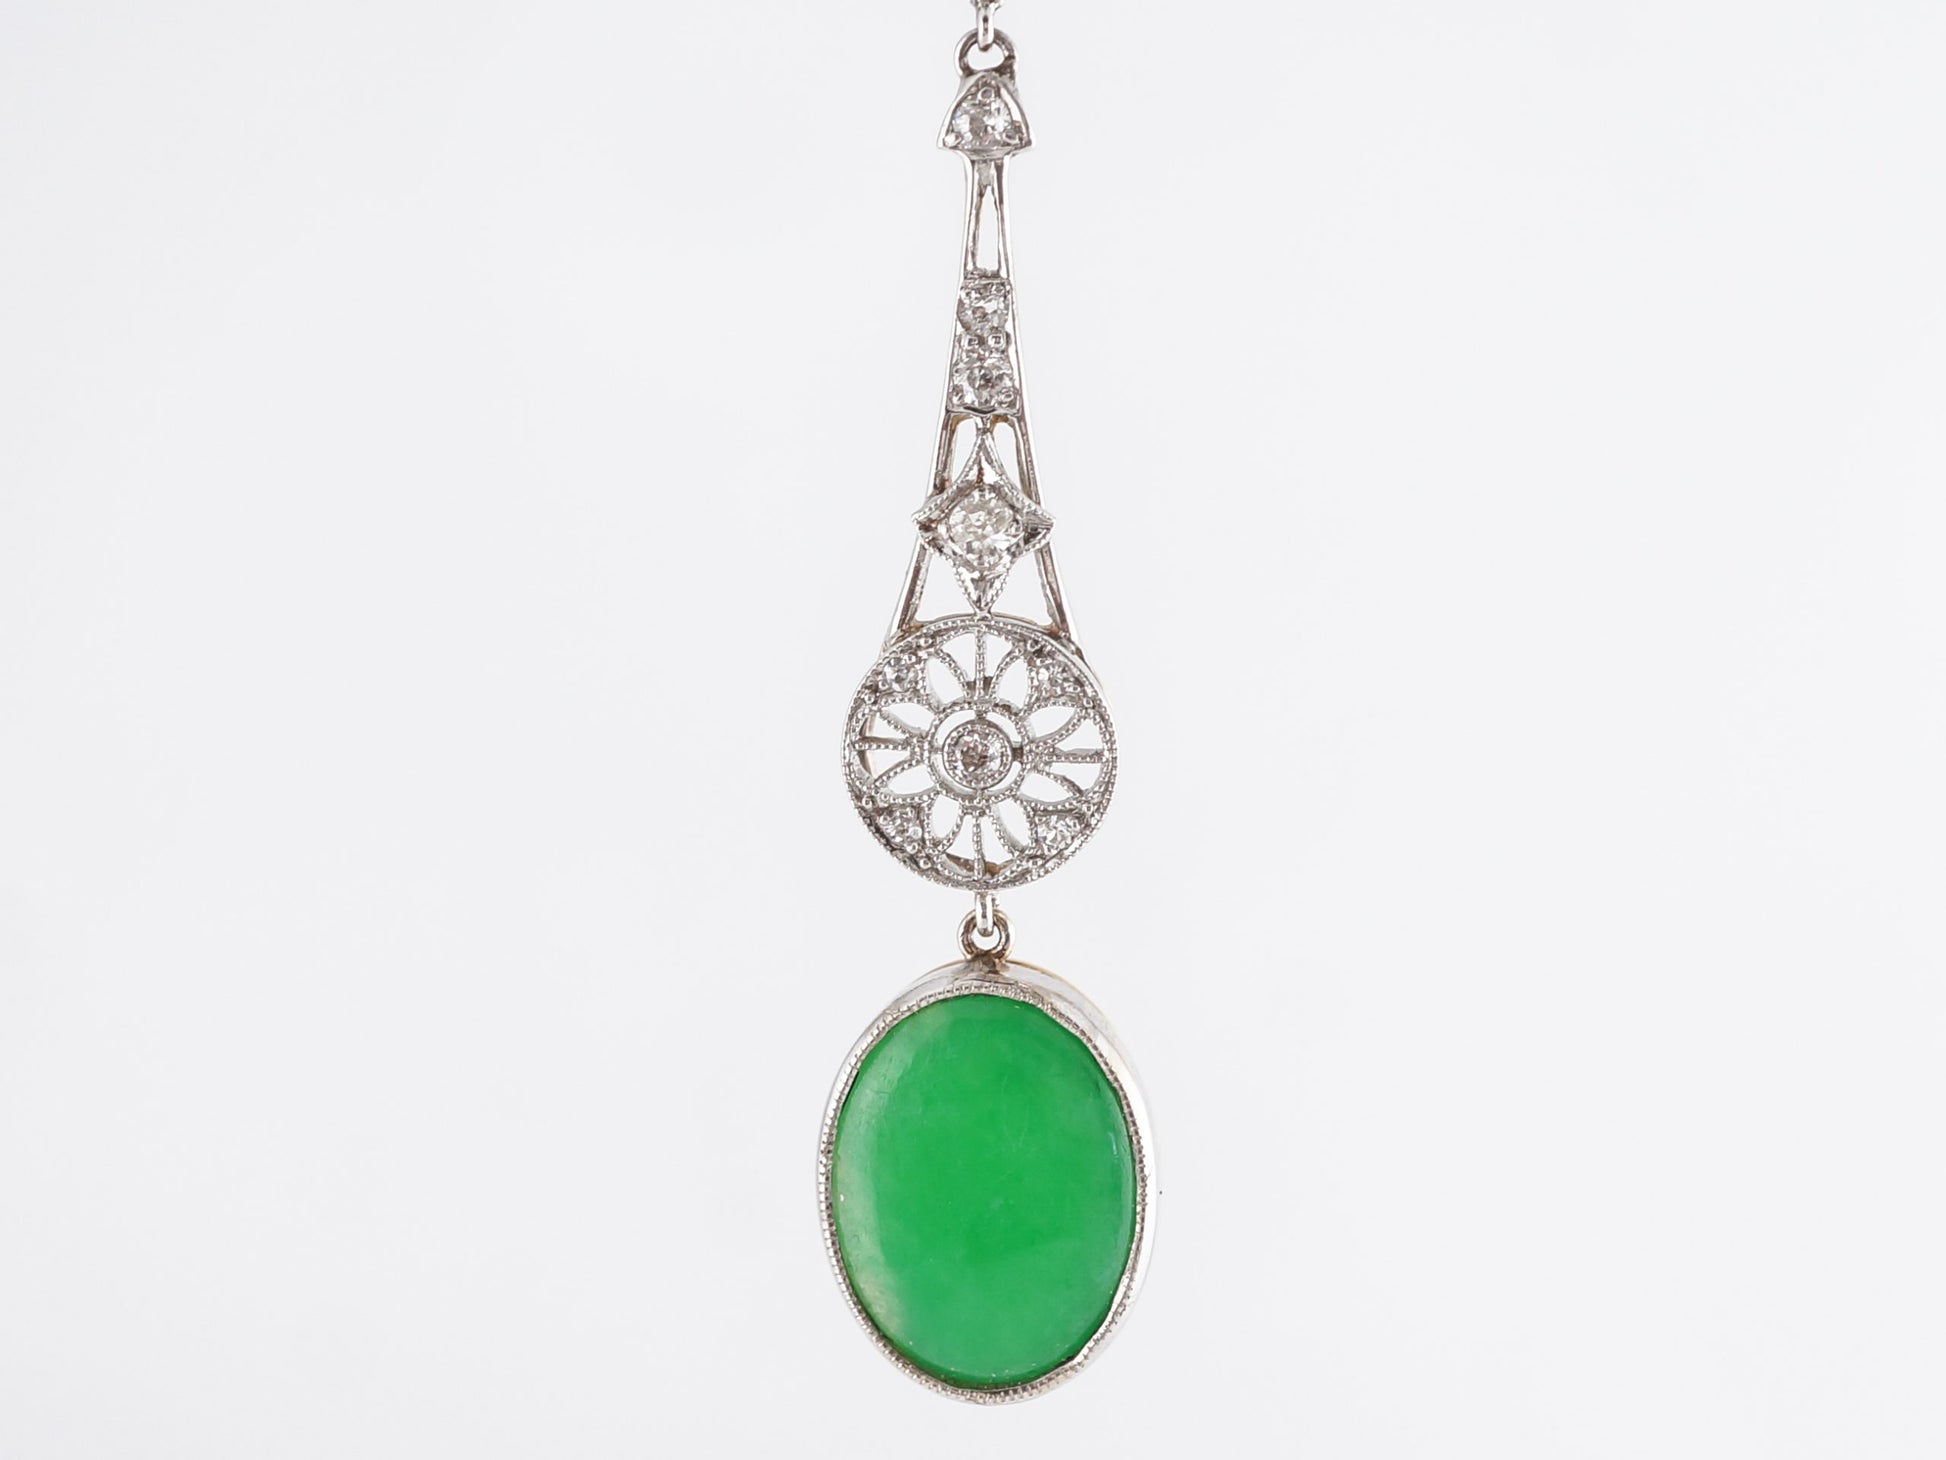 Vintage Cabochon Cut Jade and Diamond Pendant Necklace